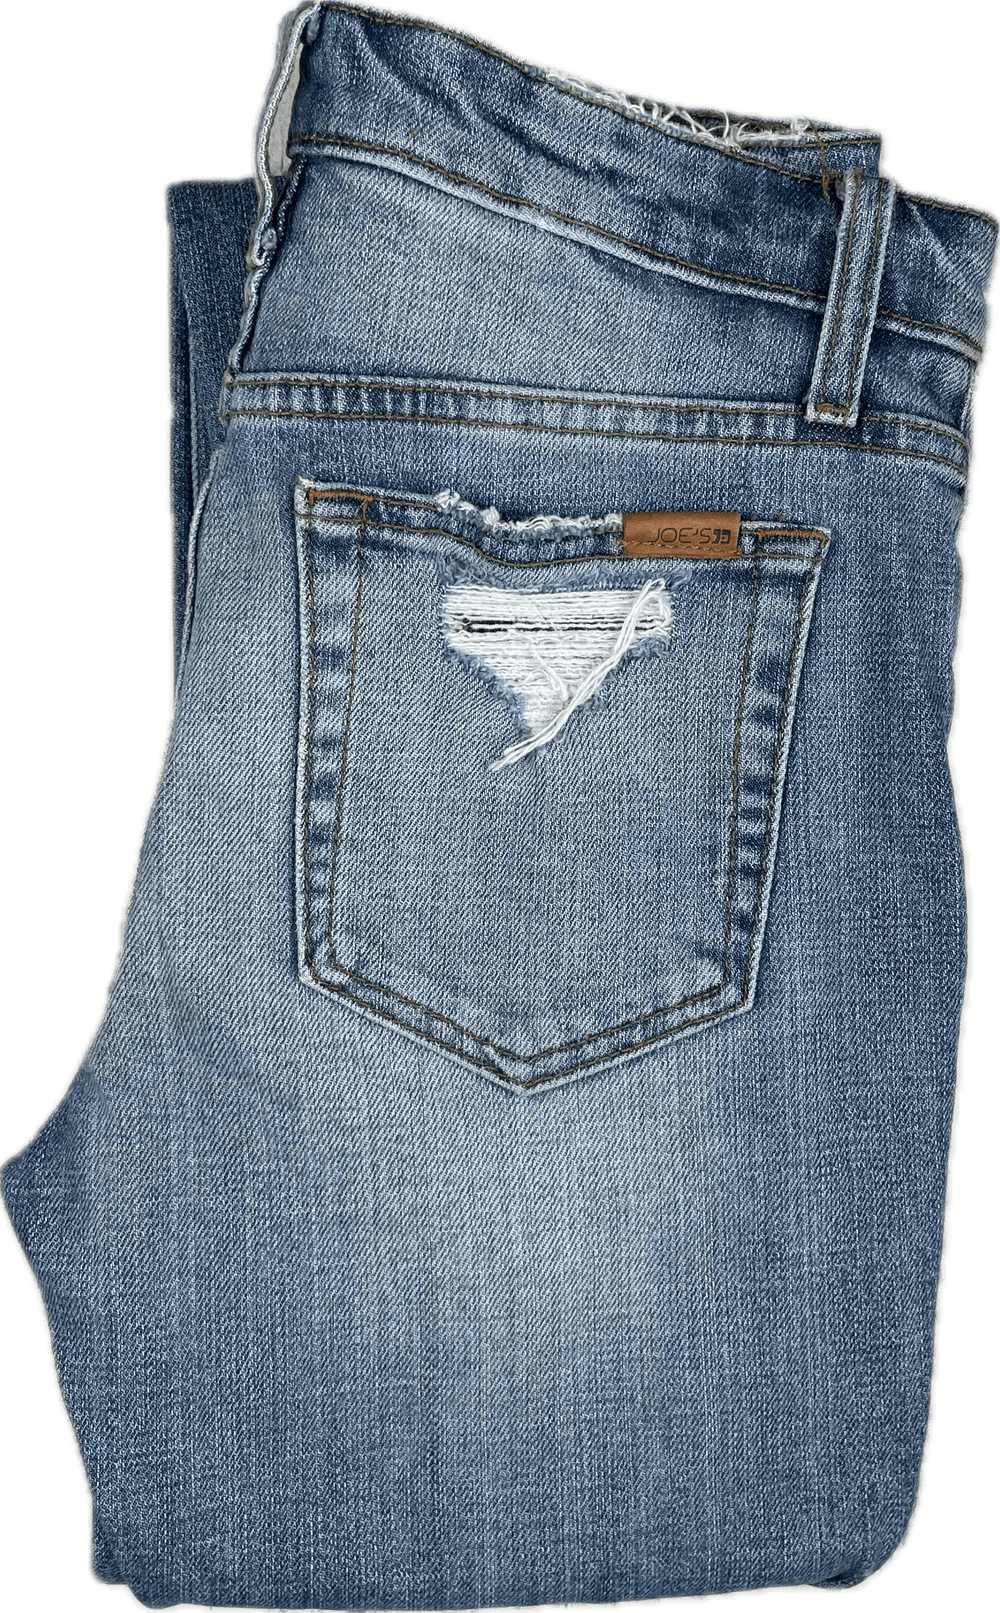 Joe's Jeans 'Essie' Ladies High Rise Skinny Jeans -Size 26 - Jean Pool